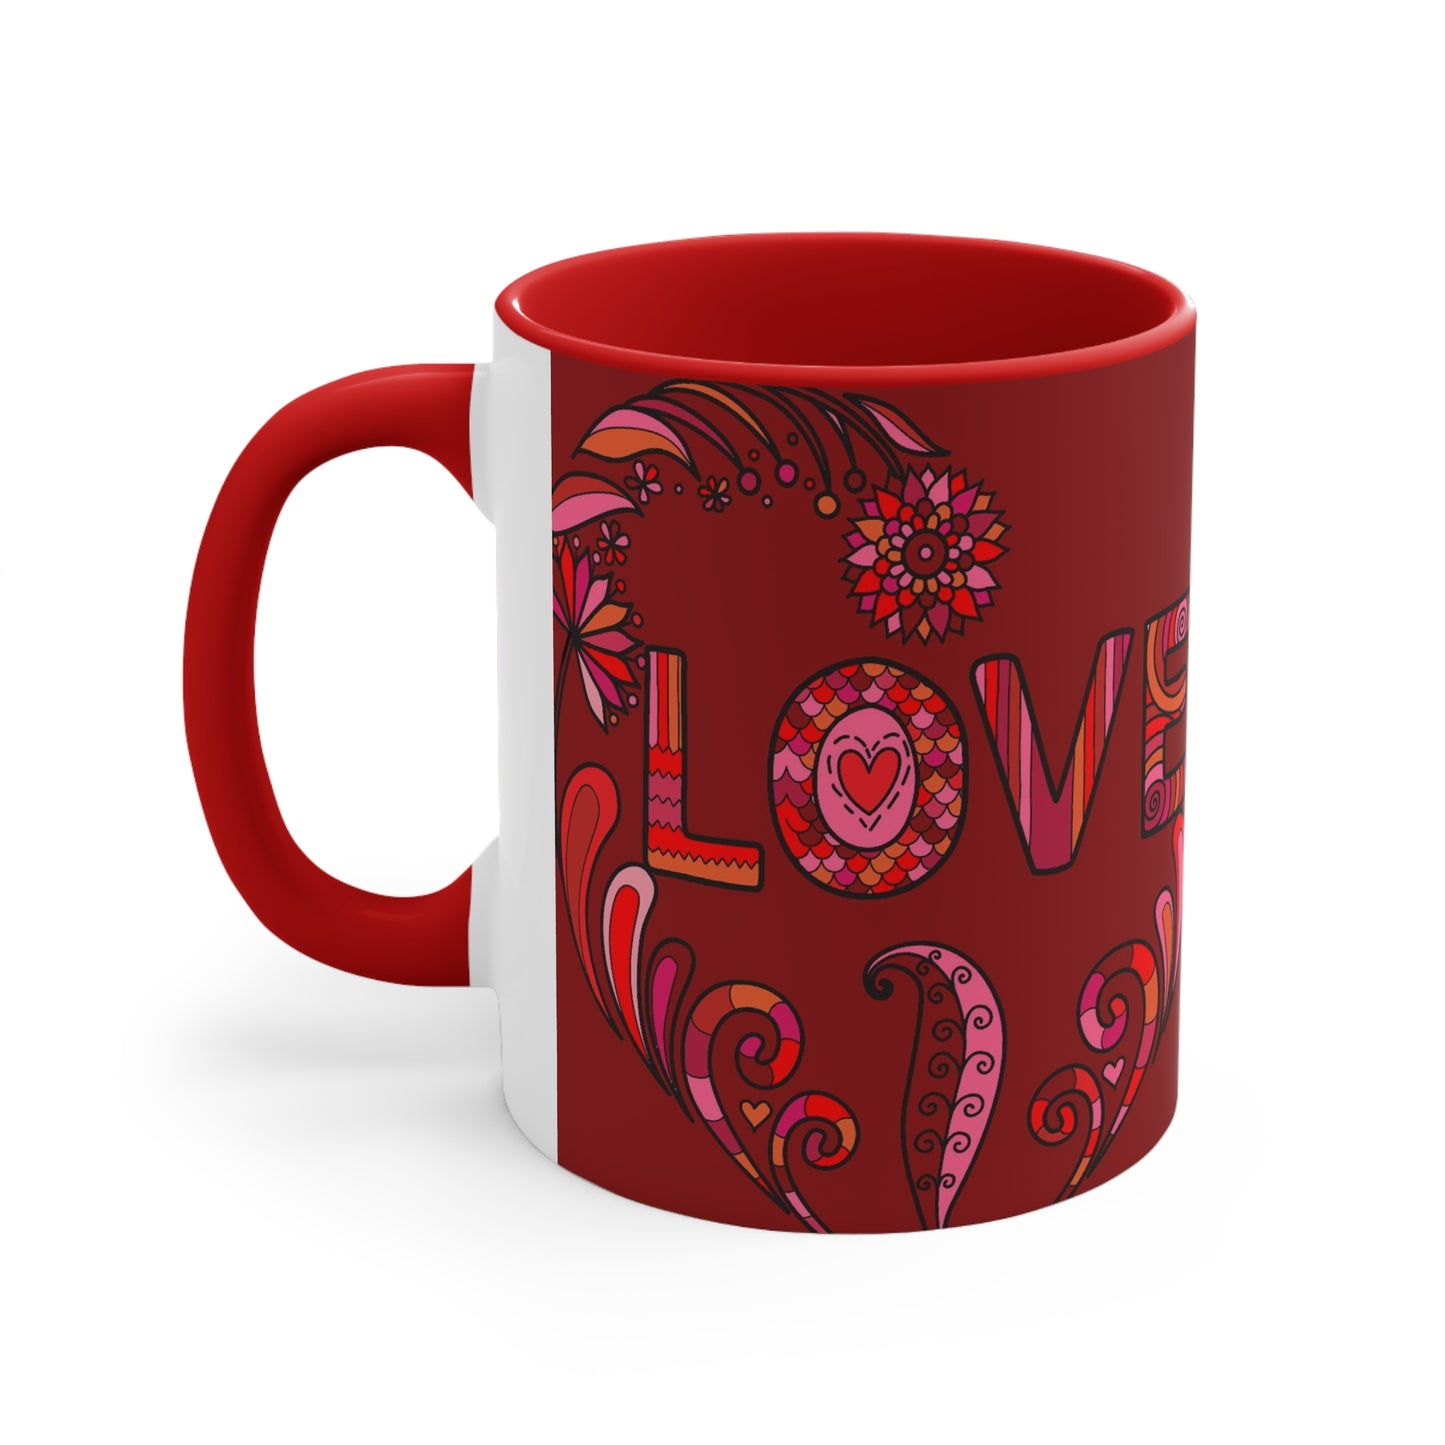 Accent Two Tone Coffee Mug, 11oz - Boho Love Mug red handle